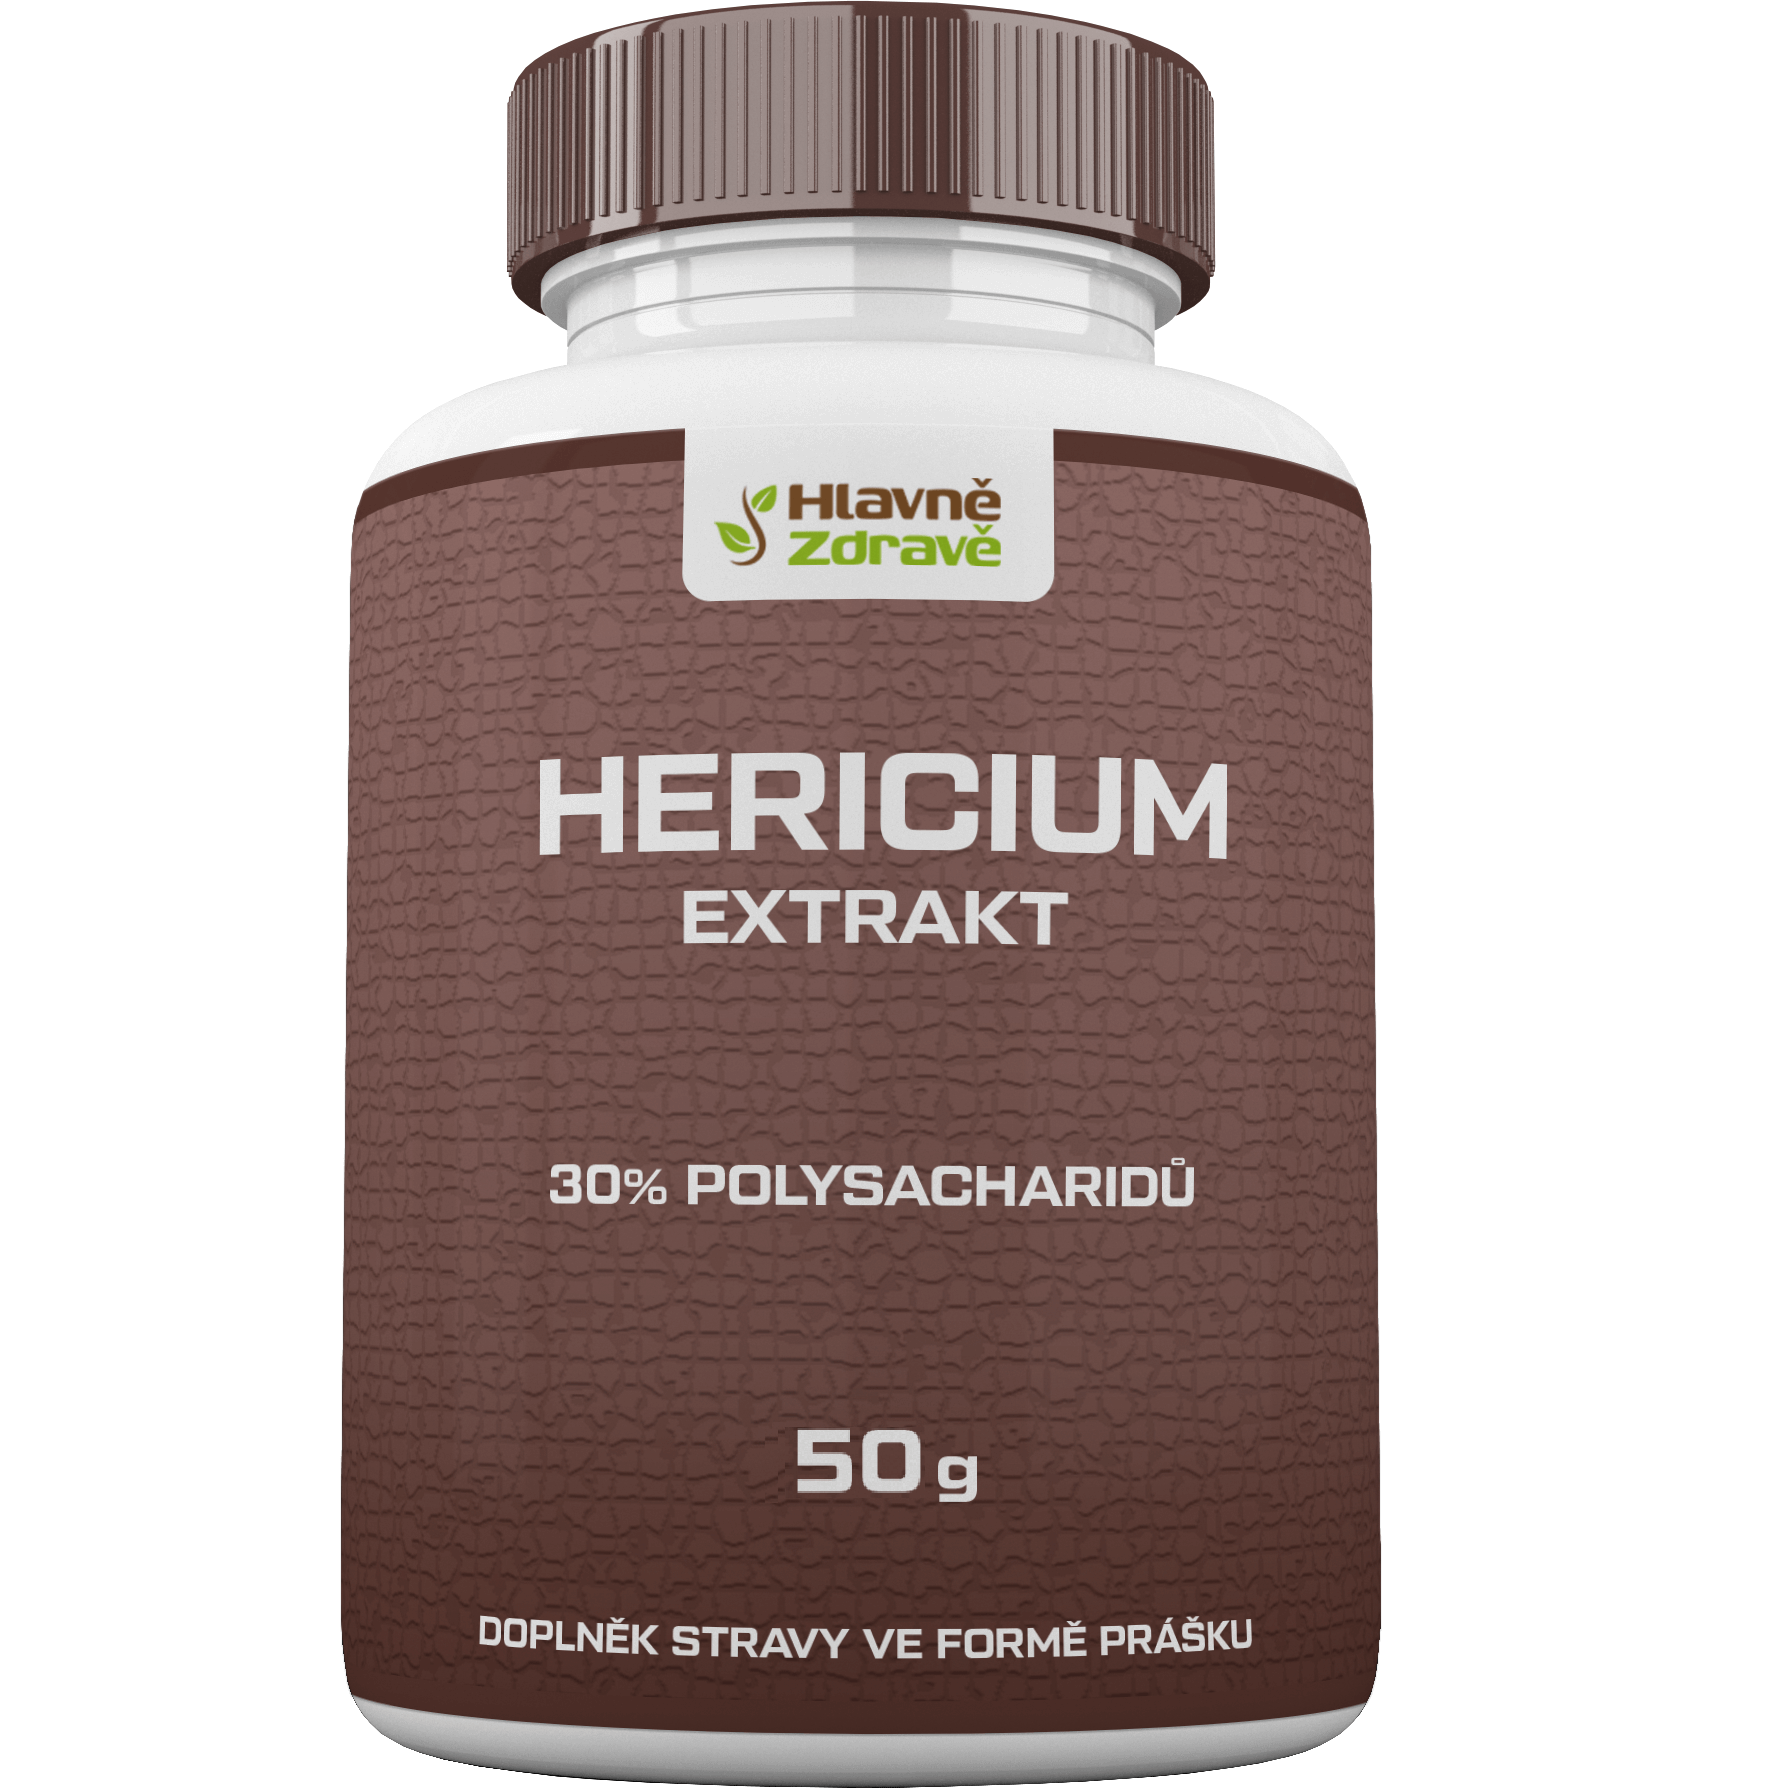 hericium extrakt prasek 30% polysacharidů 50g